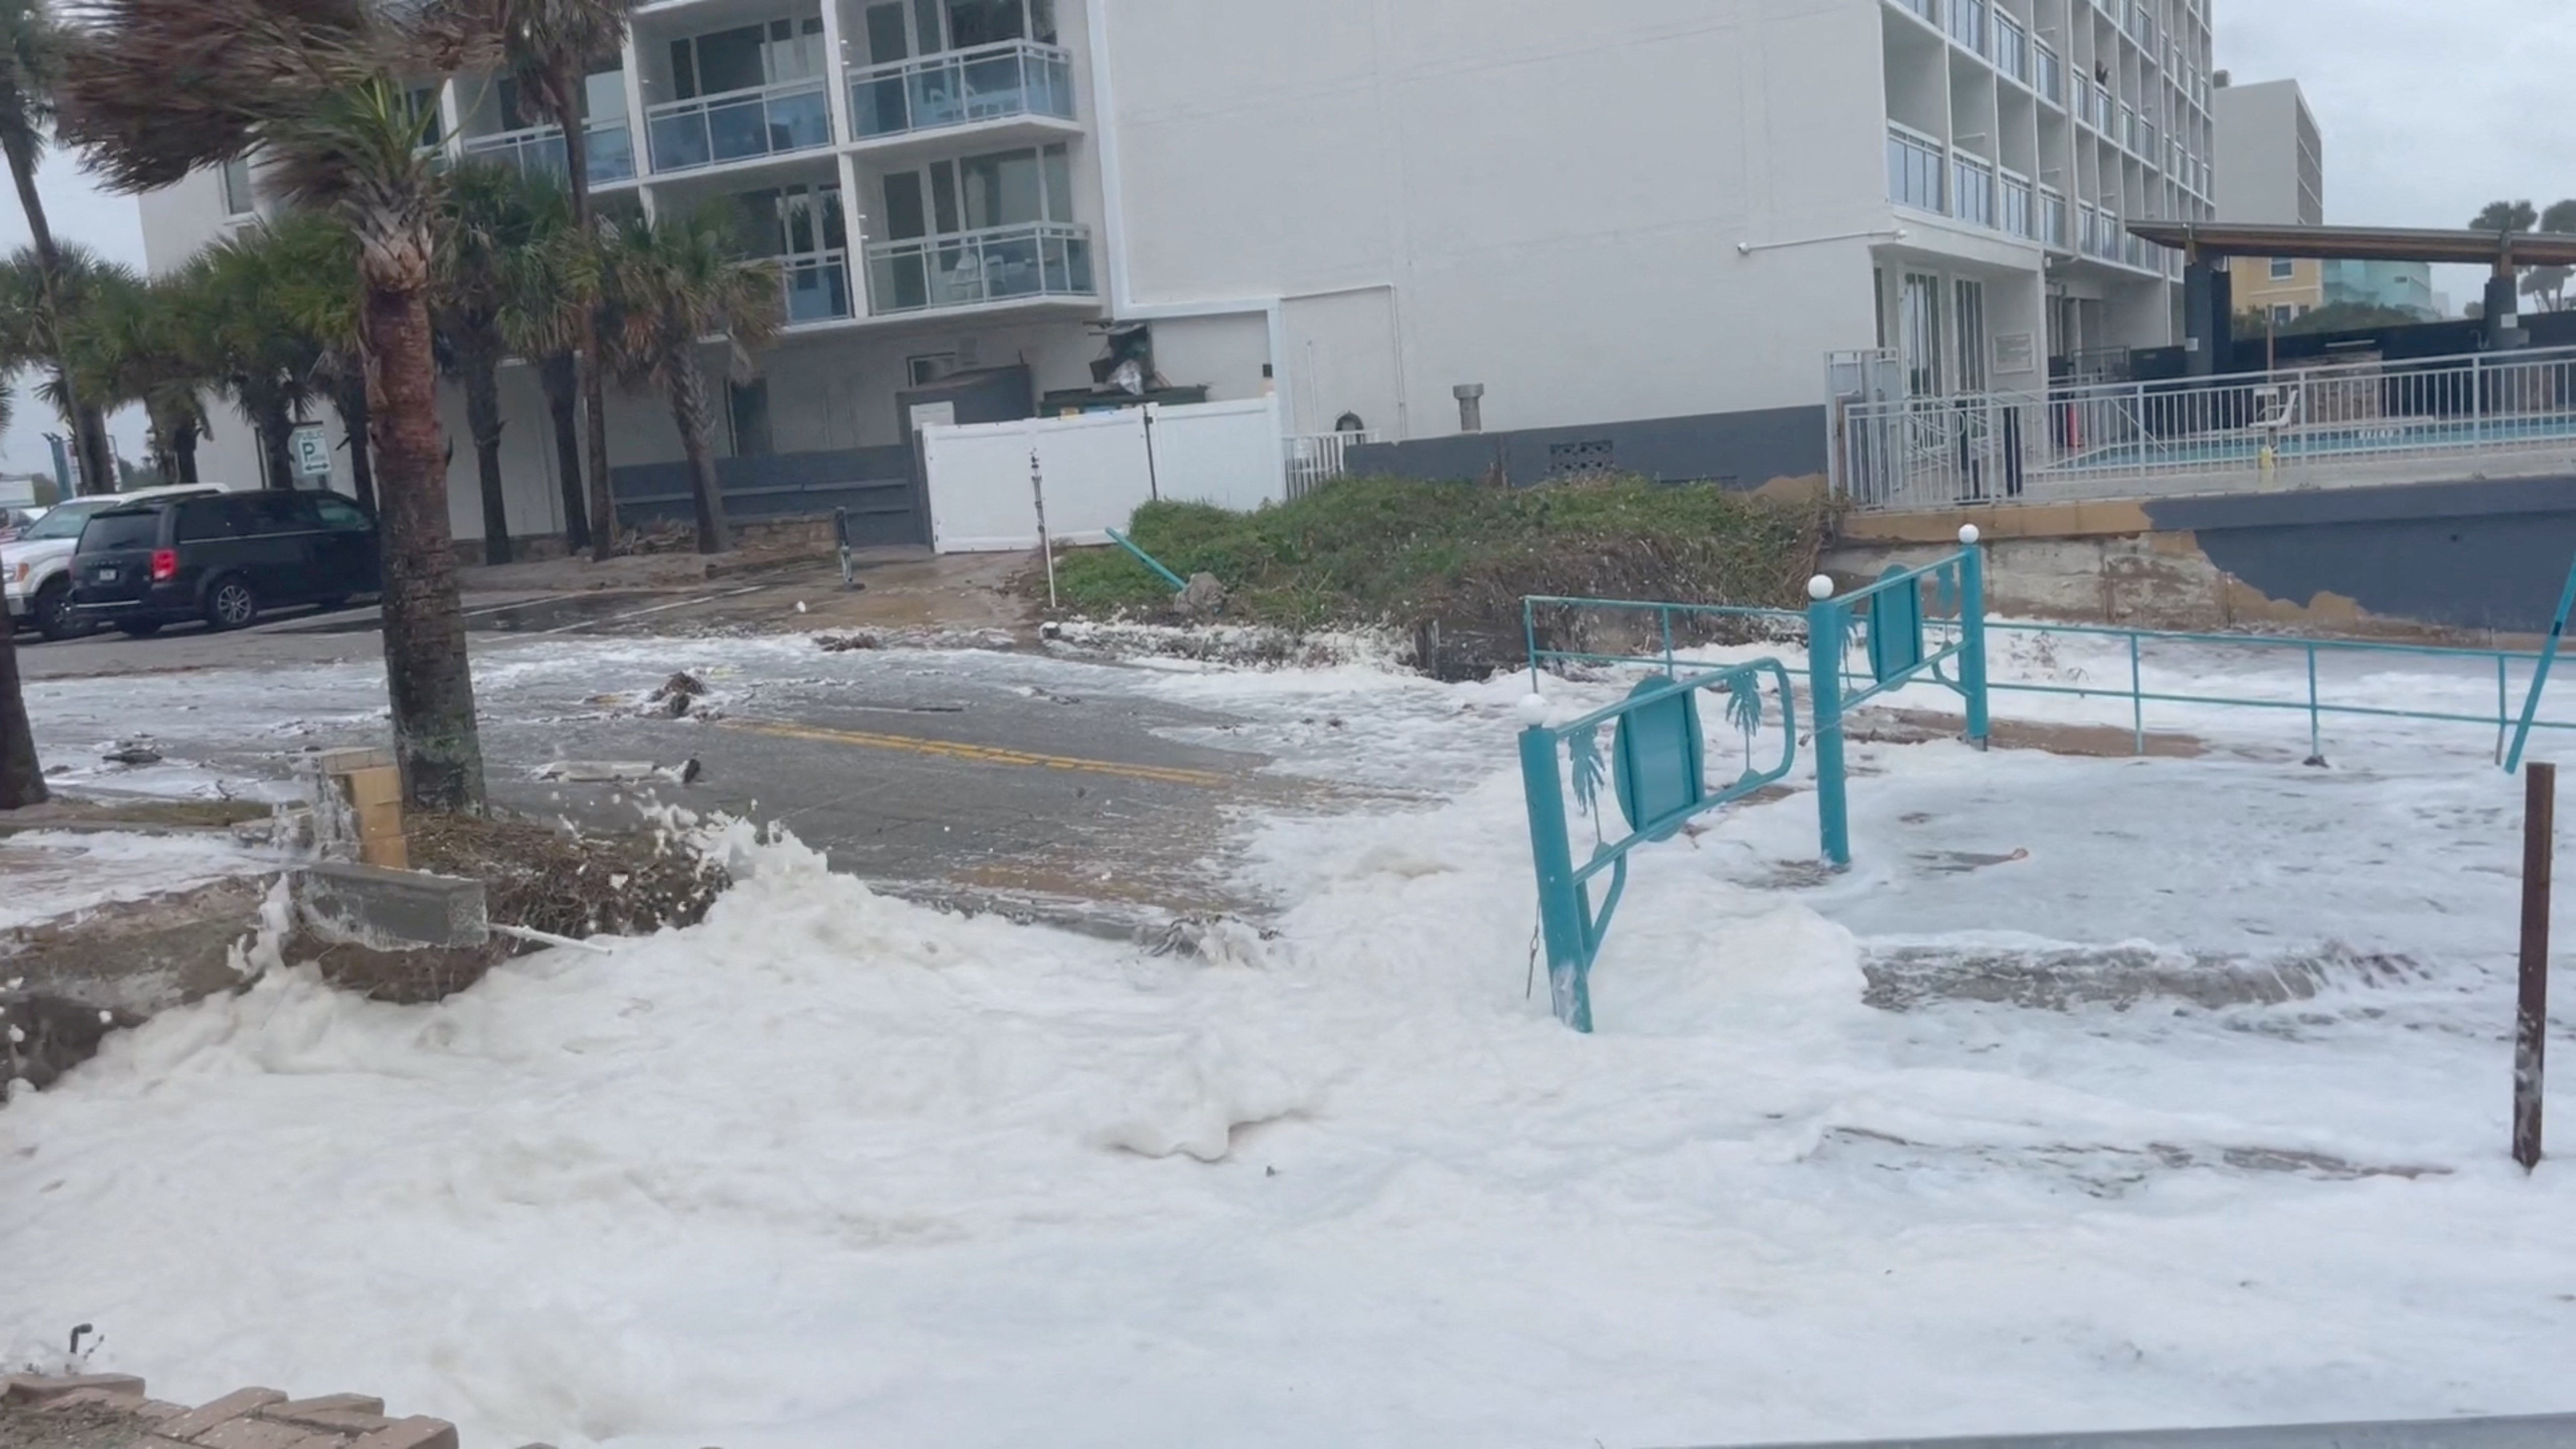 Snow in Florida? Massive amounts of sea foam wash ashore post Hurricane  Nicole